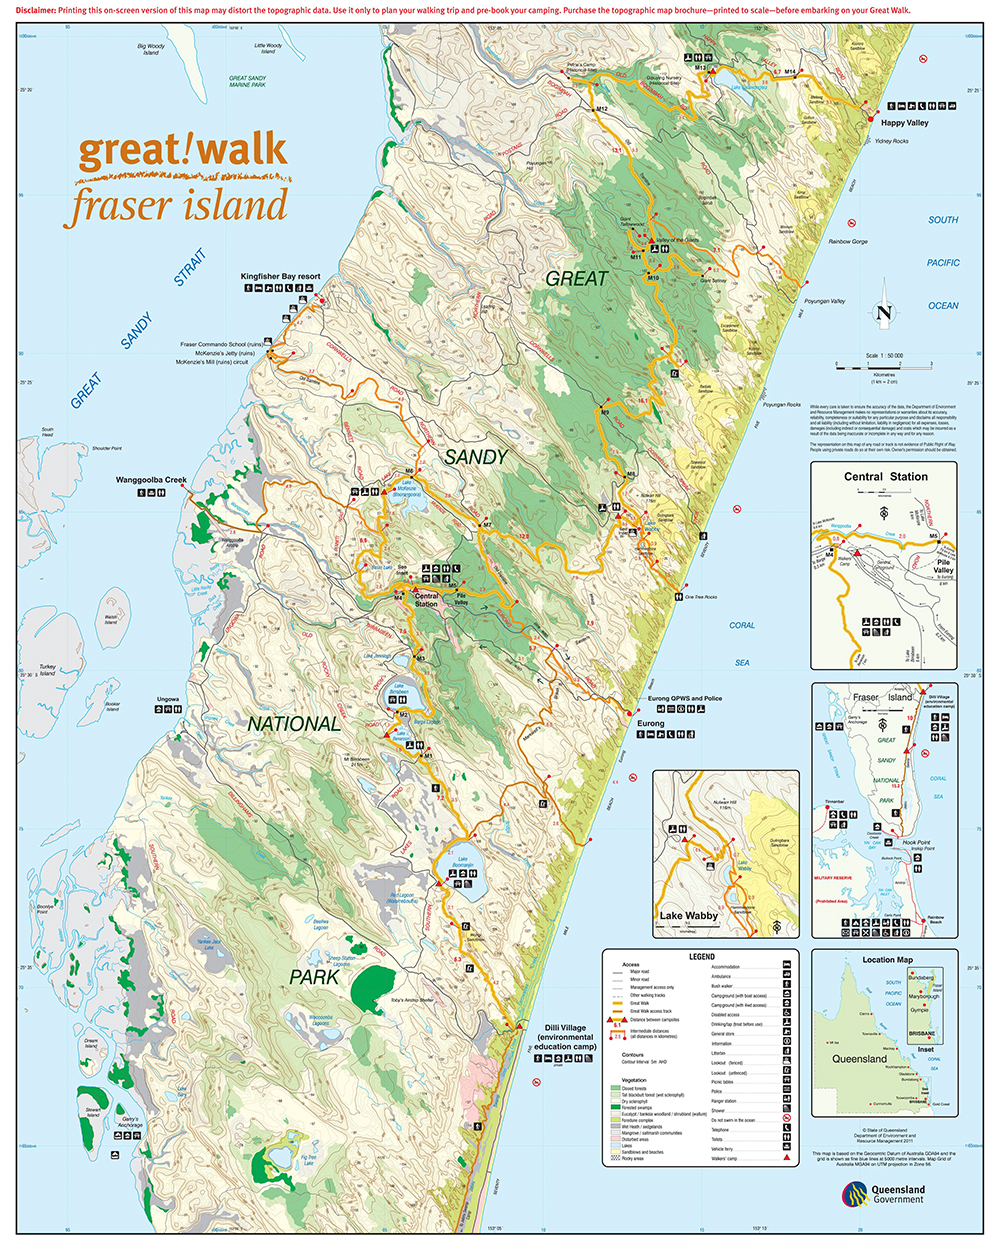 great!walk fraser island topo graphic map